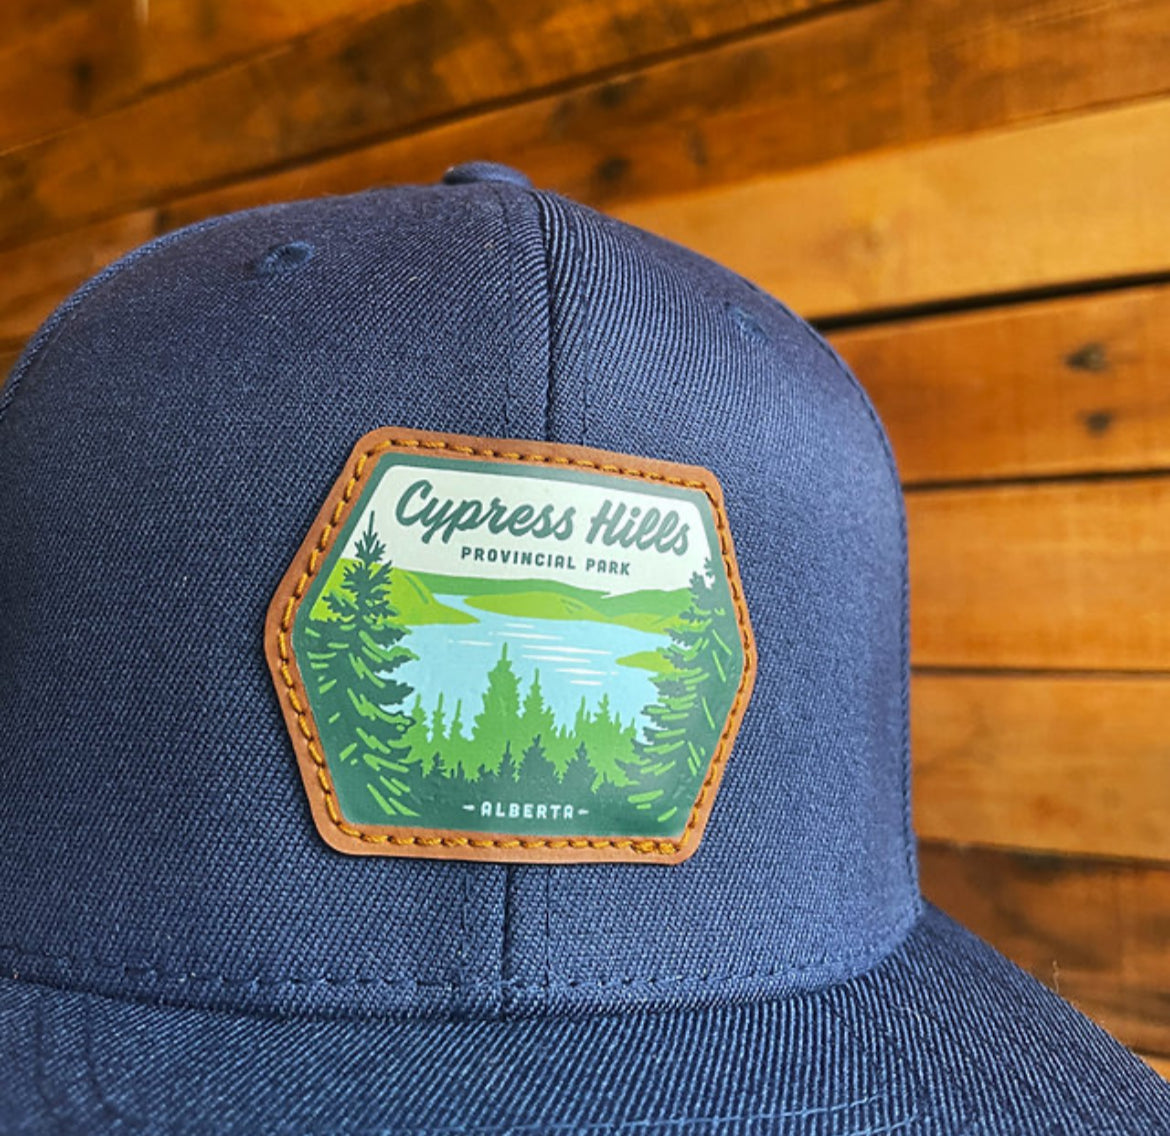 My Favourite Edison Flat Hat – 7riverstradingco